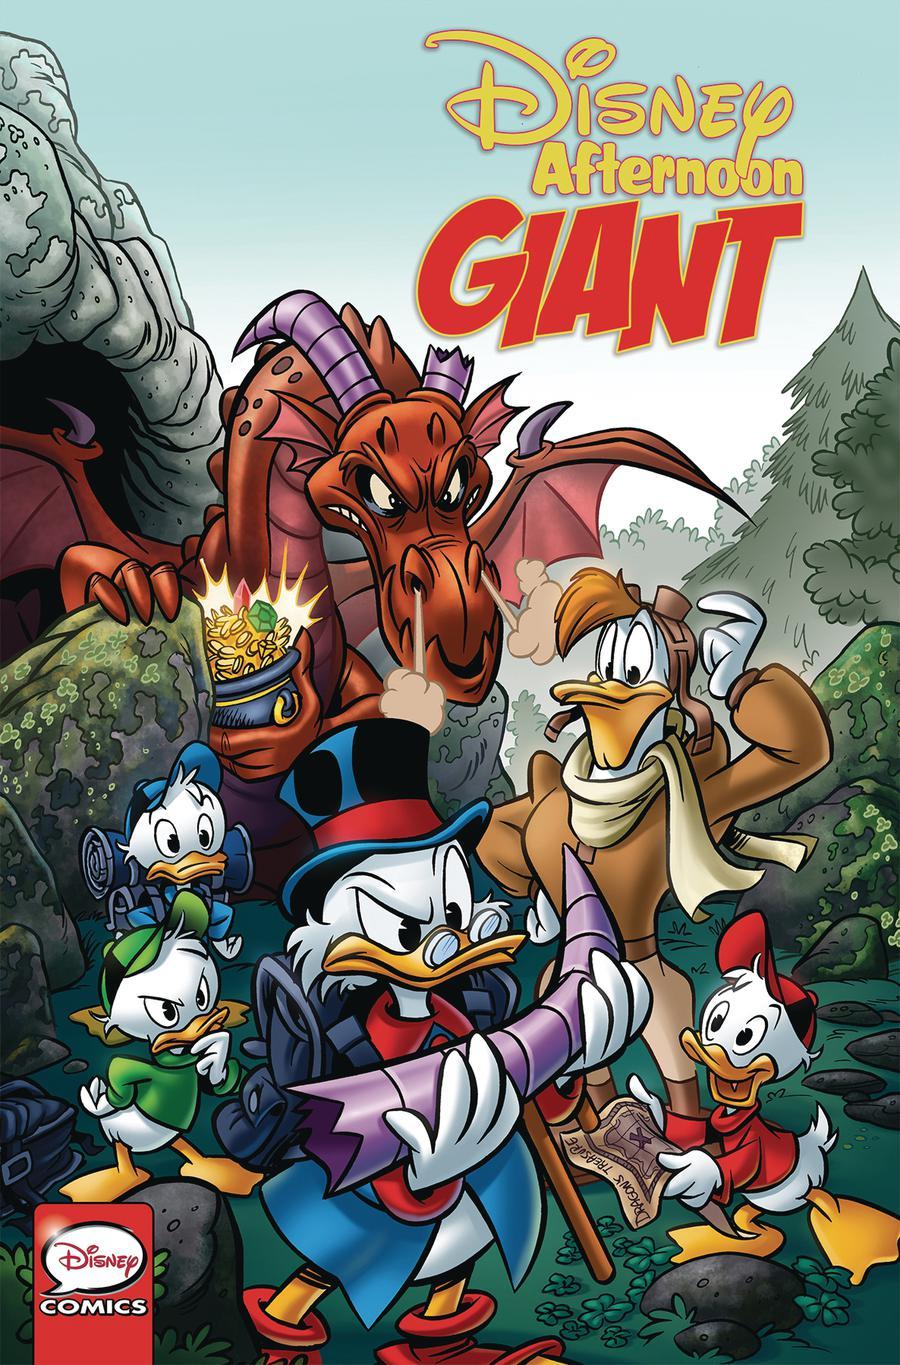 Disney Afternoon Giant Vol. 1 #3